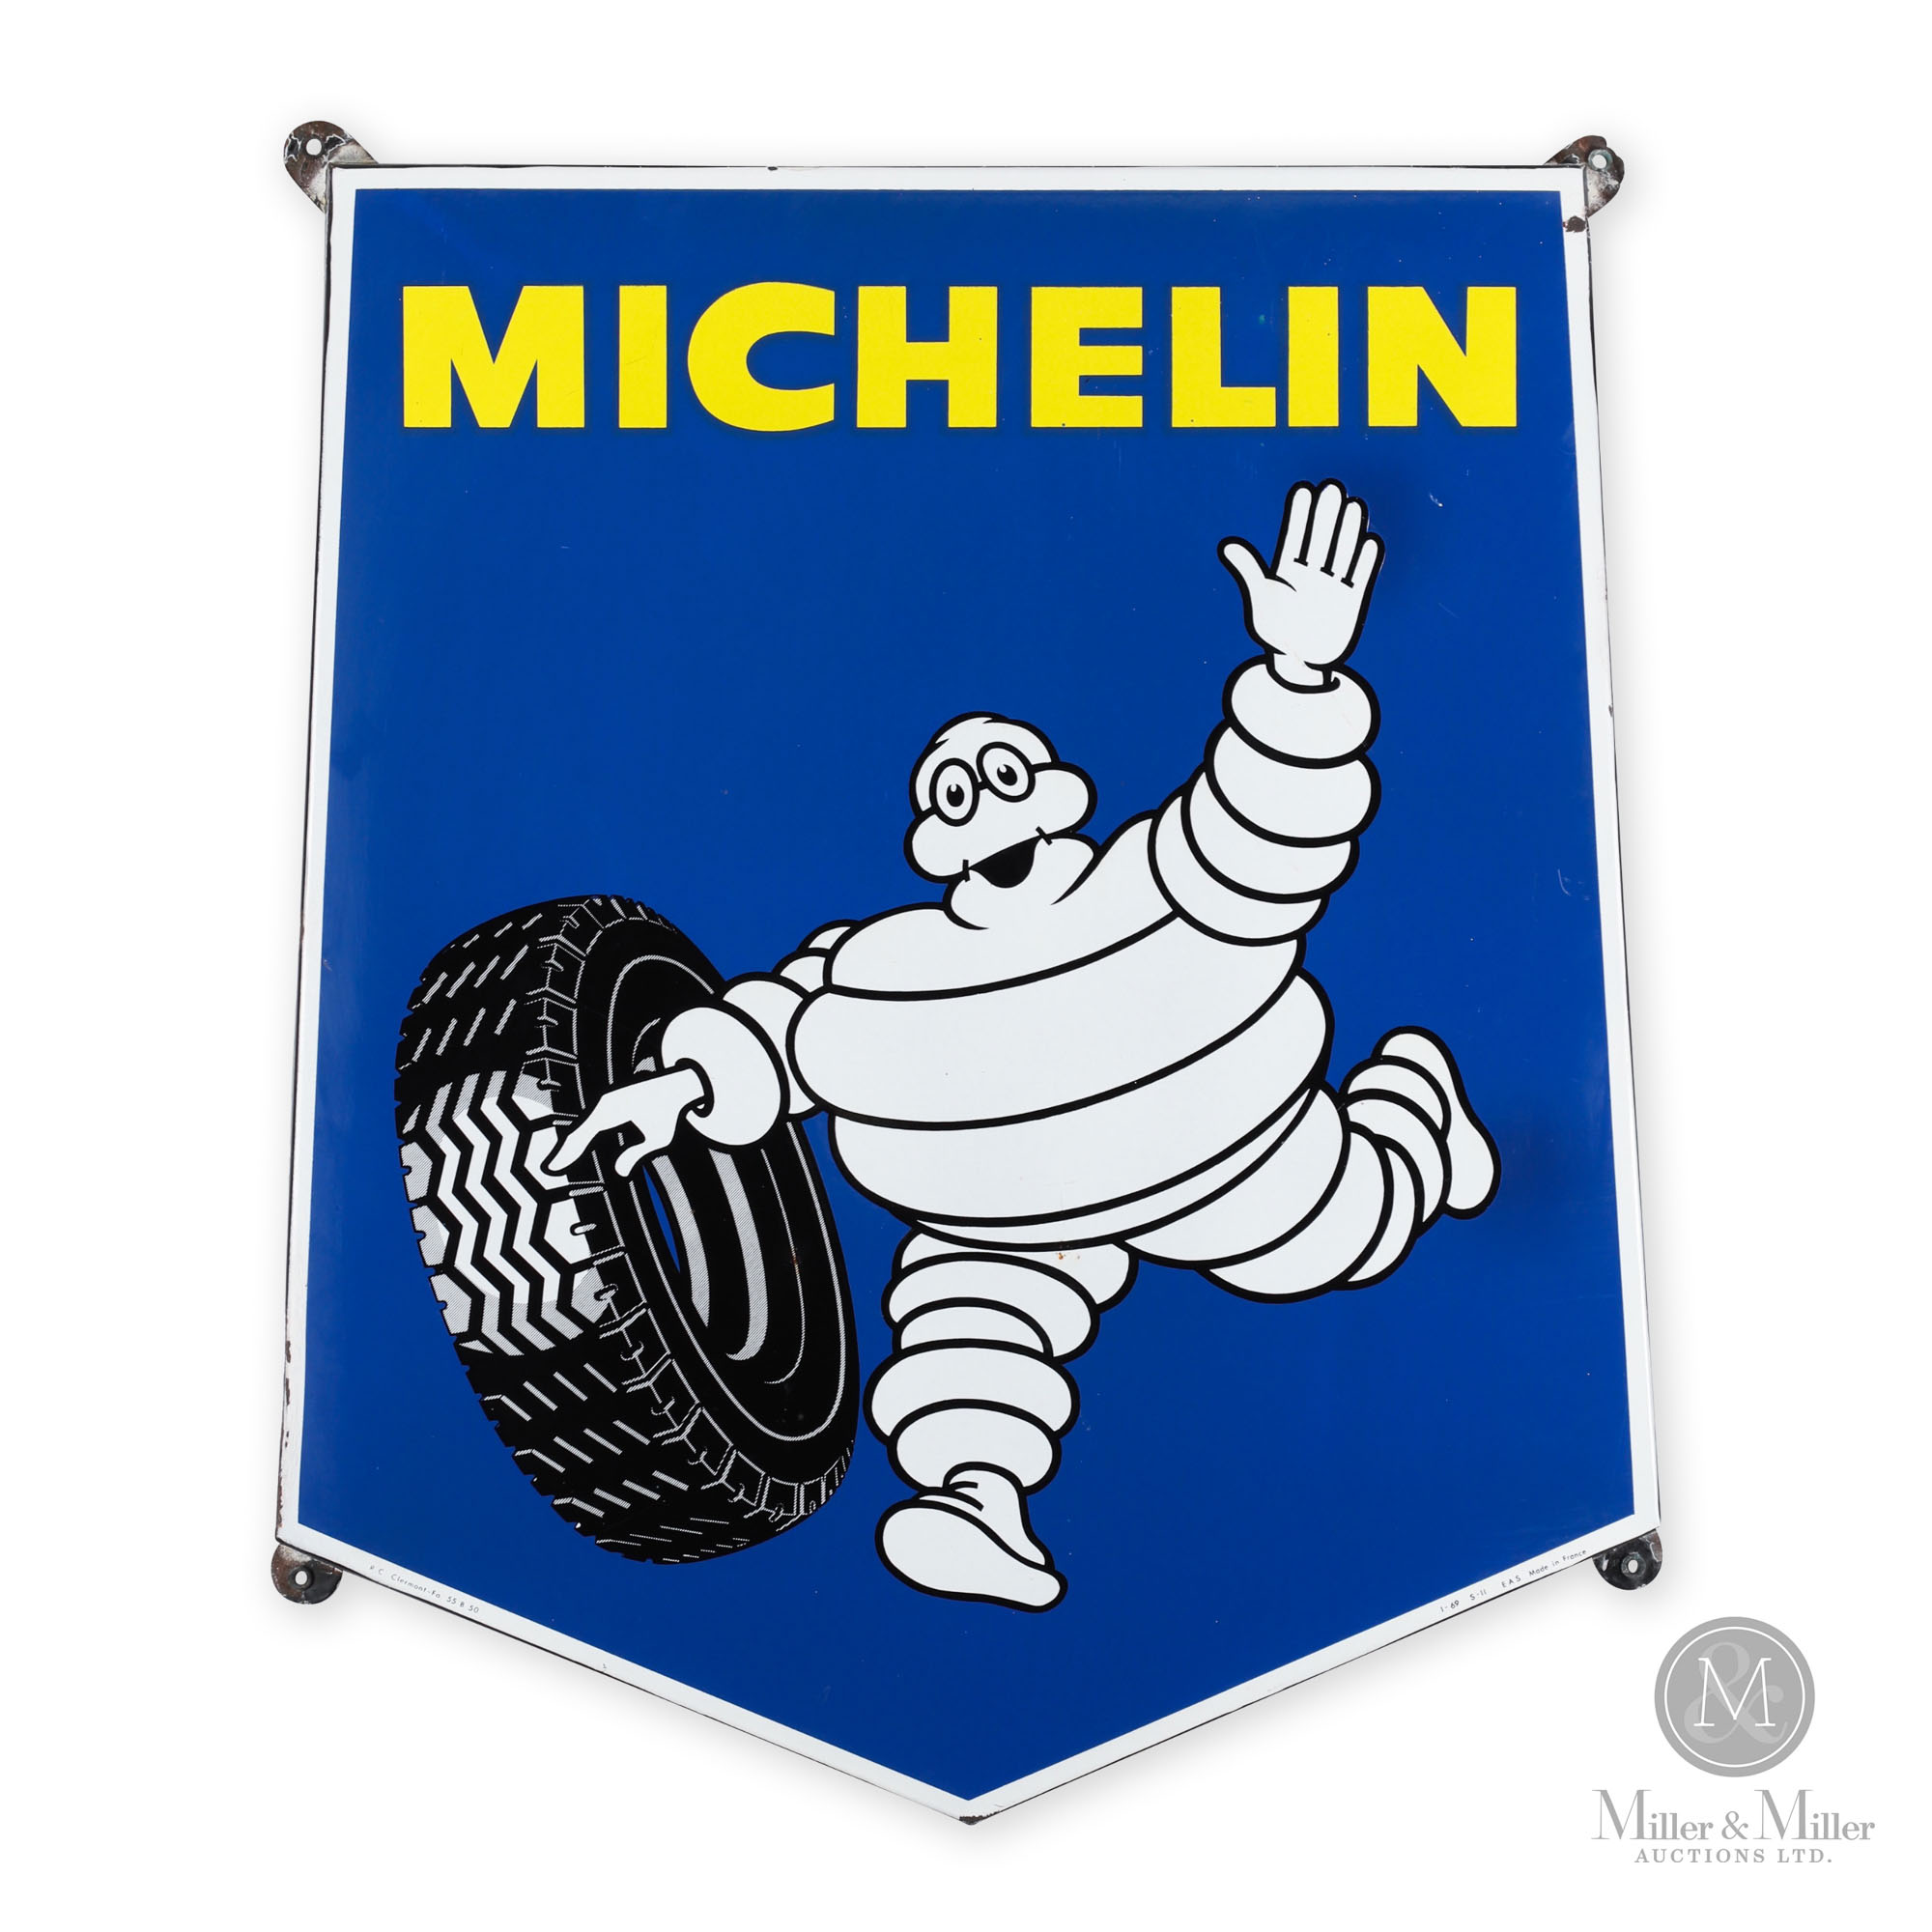 Michelin Bibendum Camion  Michelin tires, Michelin man, Matra